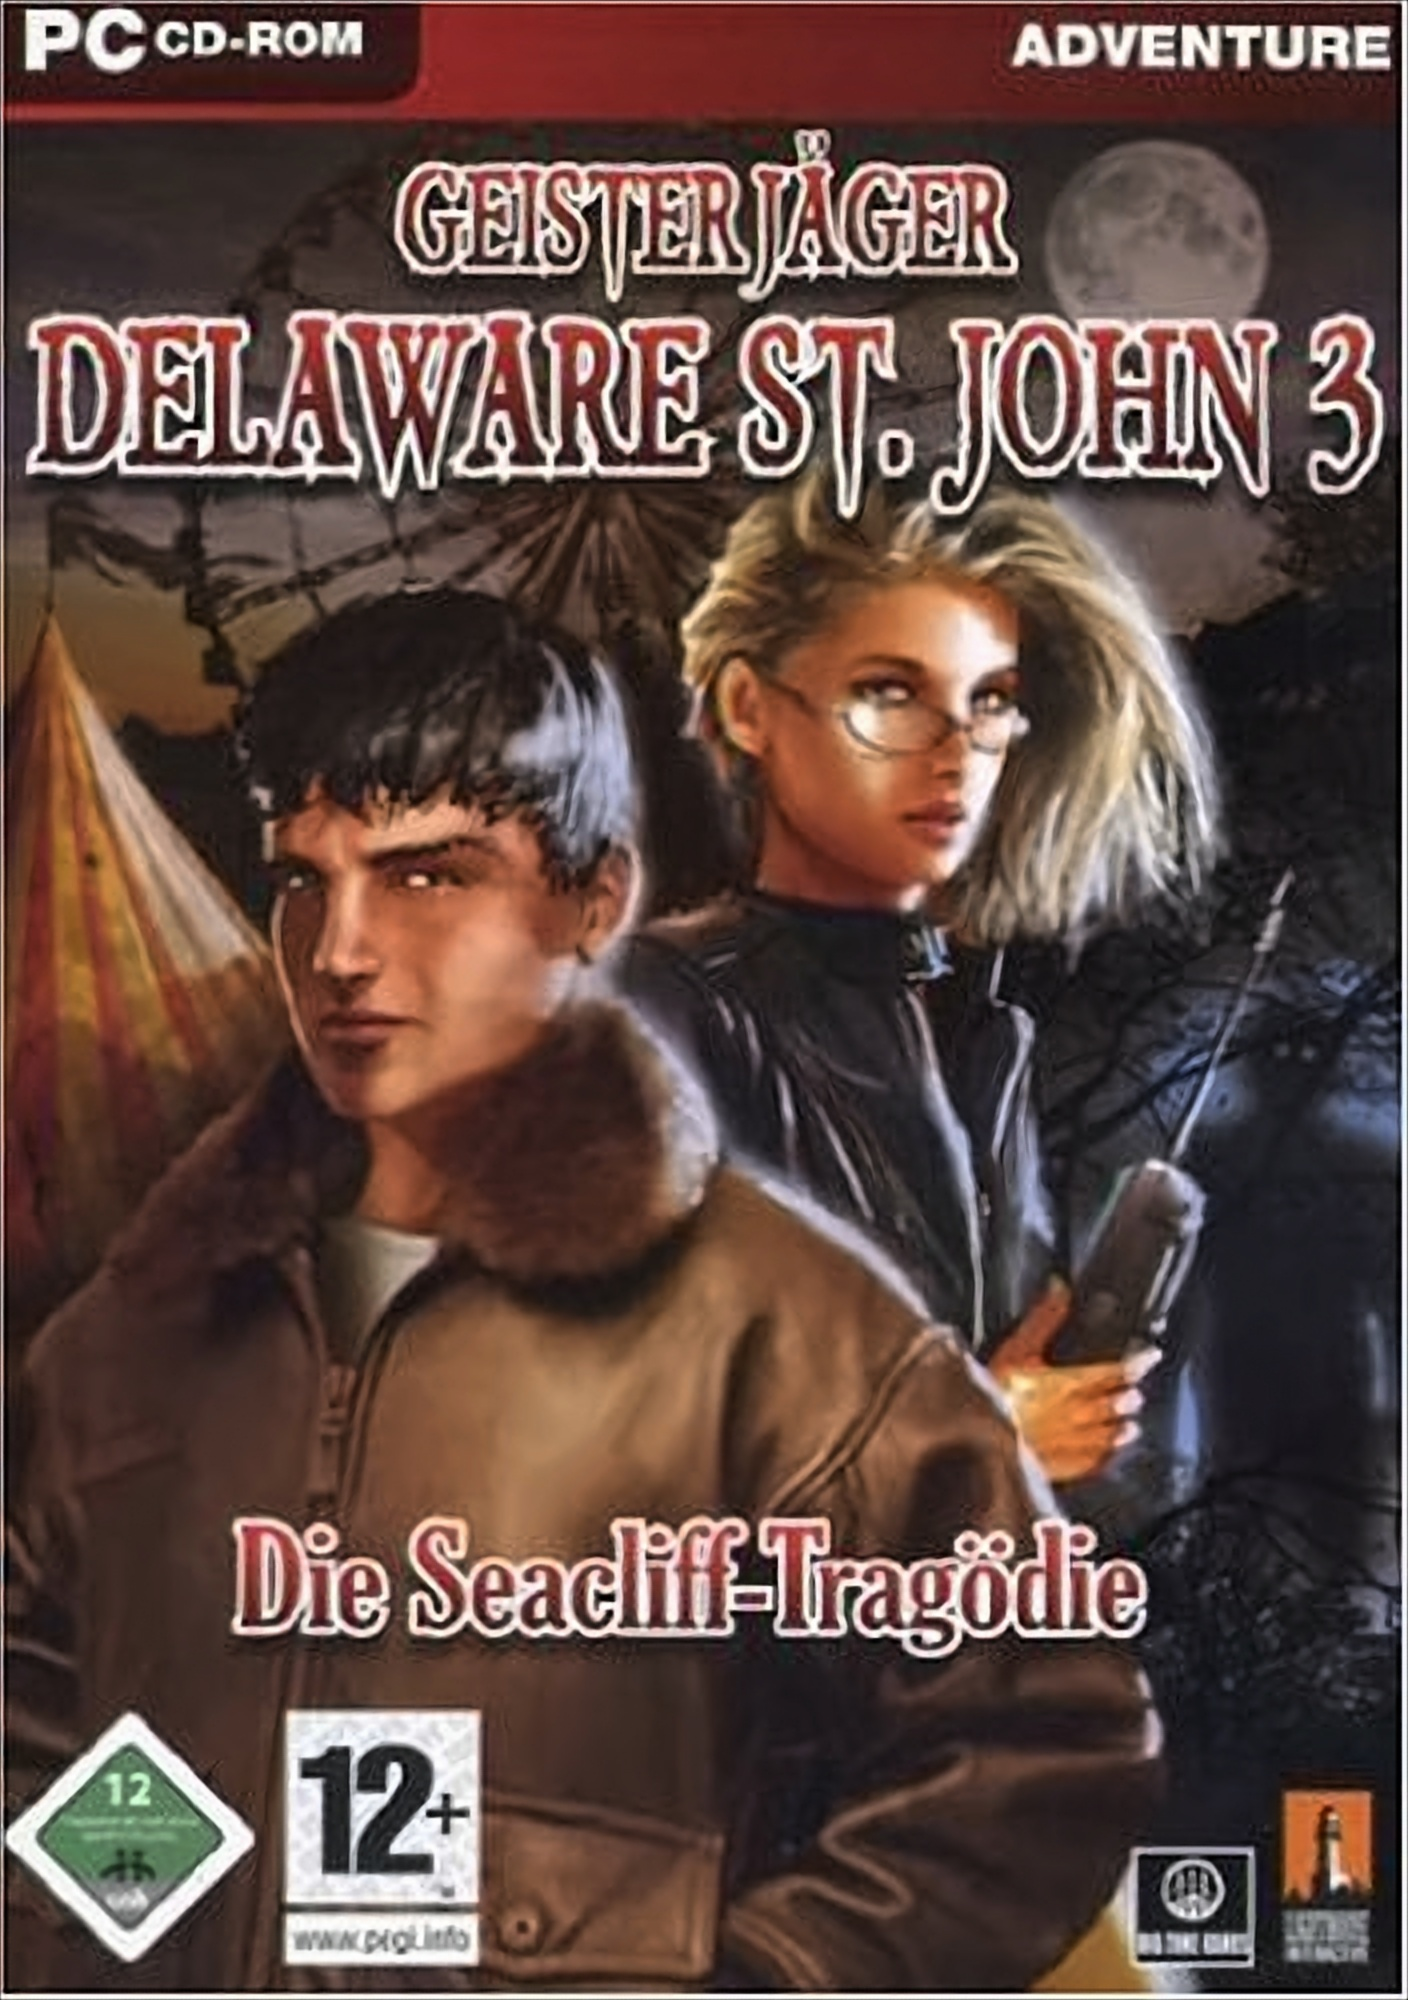 3 Seacliff Die [PC] John - - Vol. Delaware Tragödie Geisterjäger St.